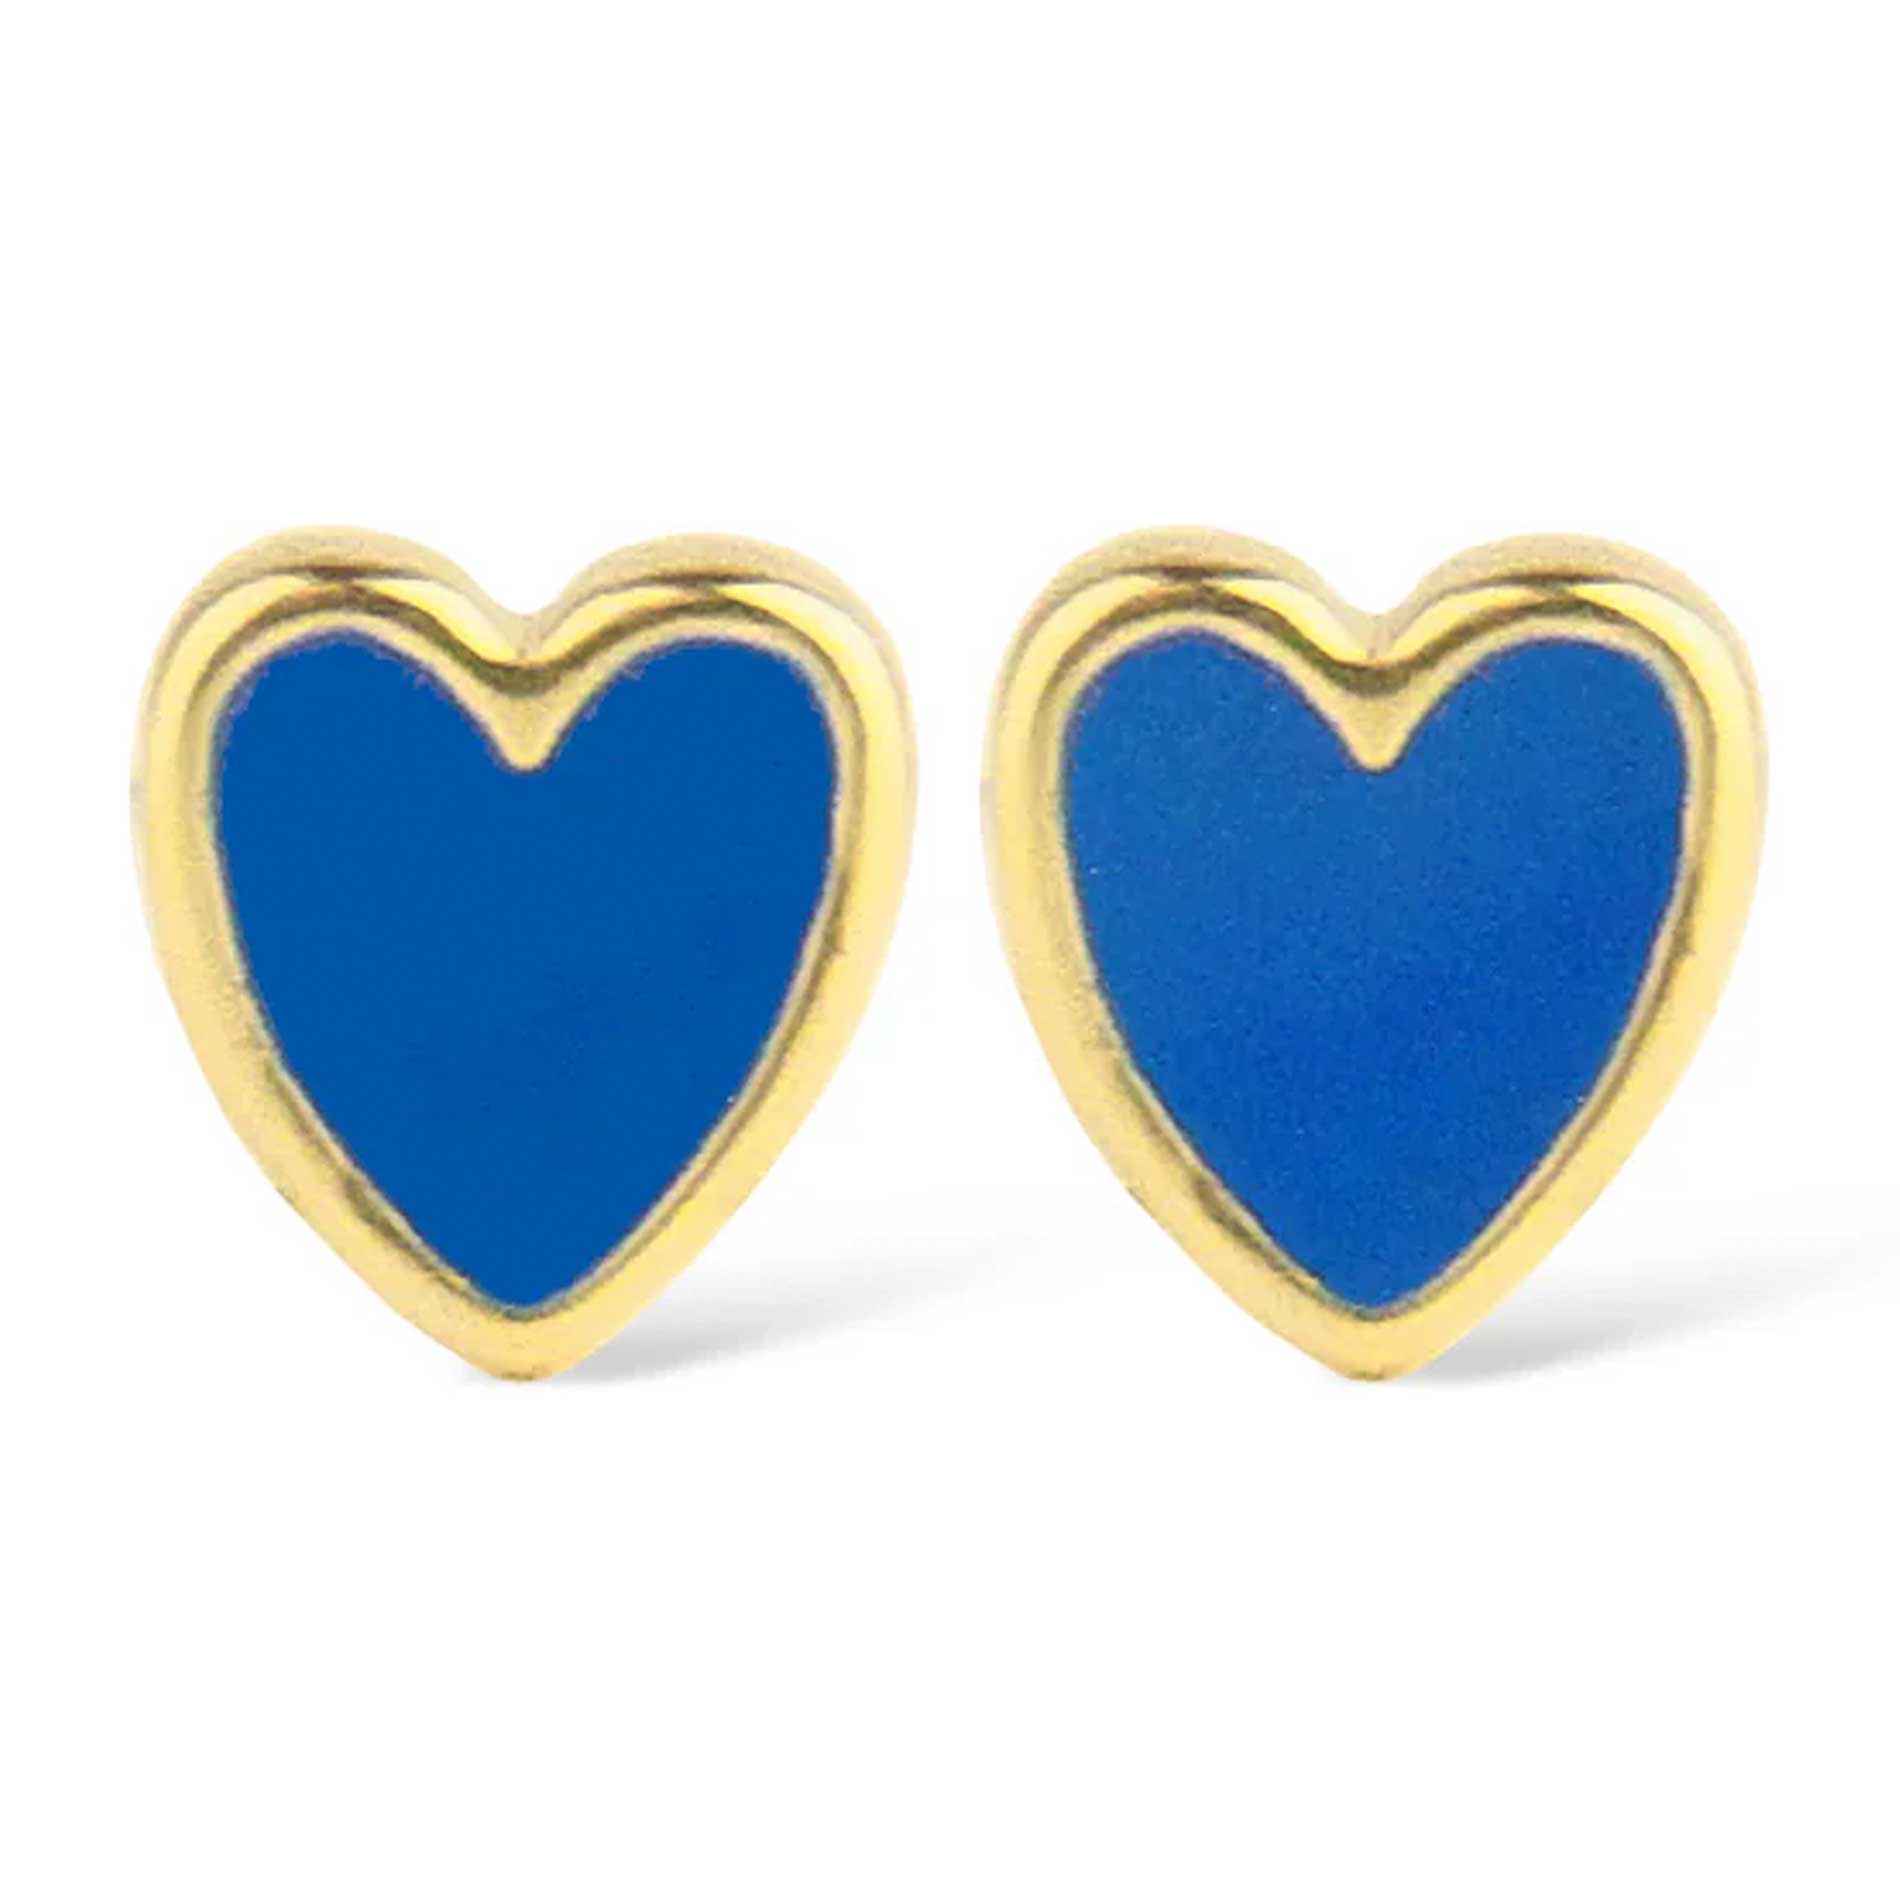 Forgyldte hjerteørestikker med blå emalje fra Jeberg